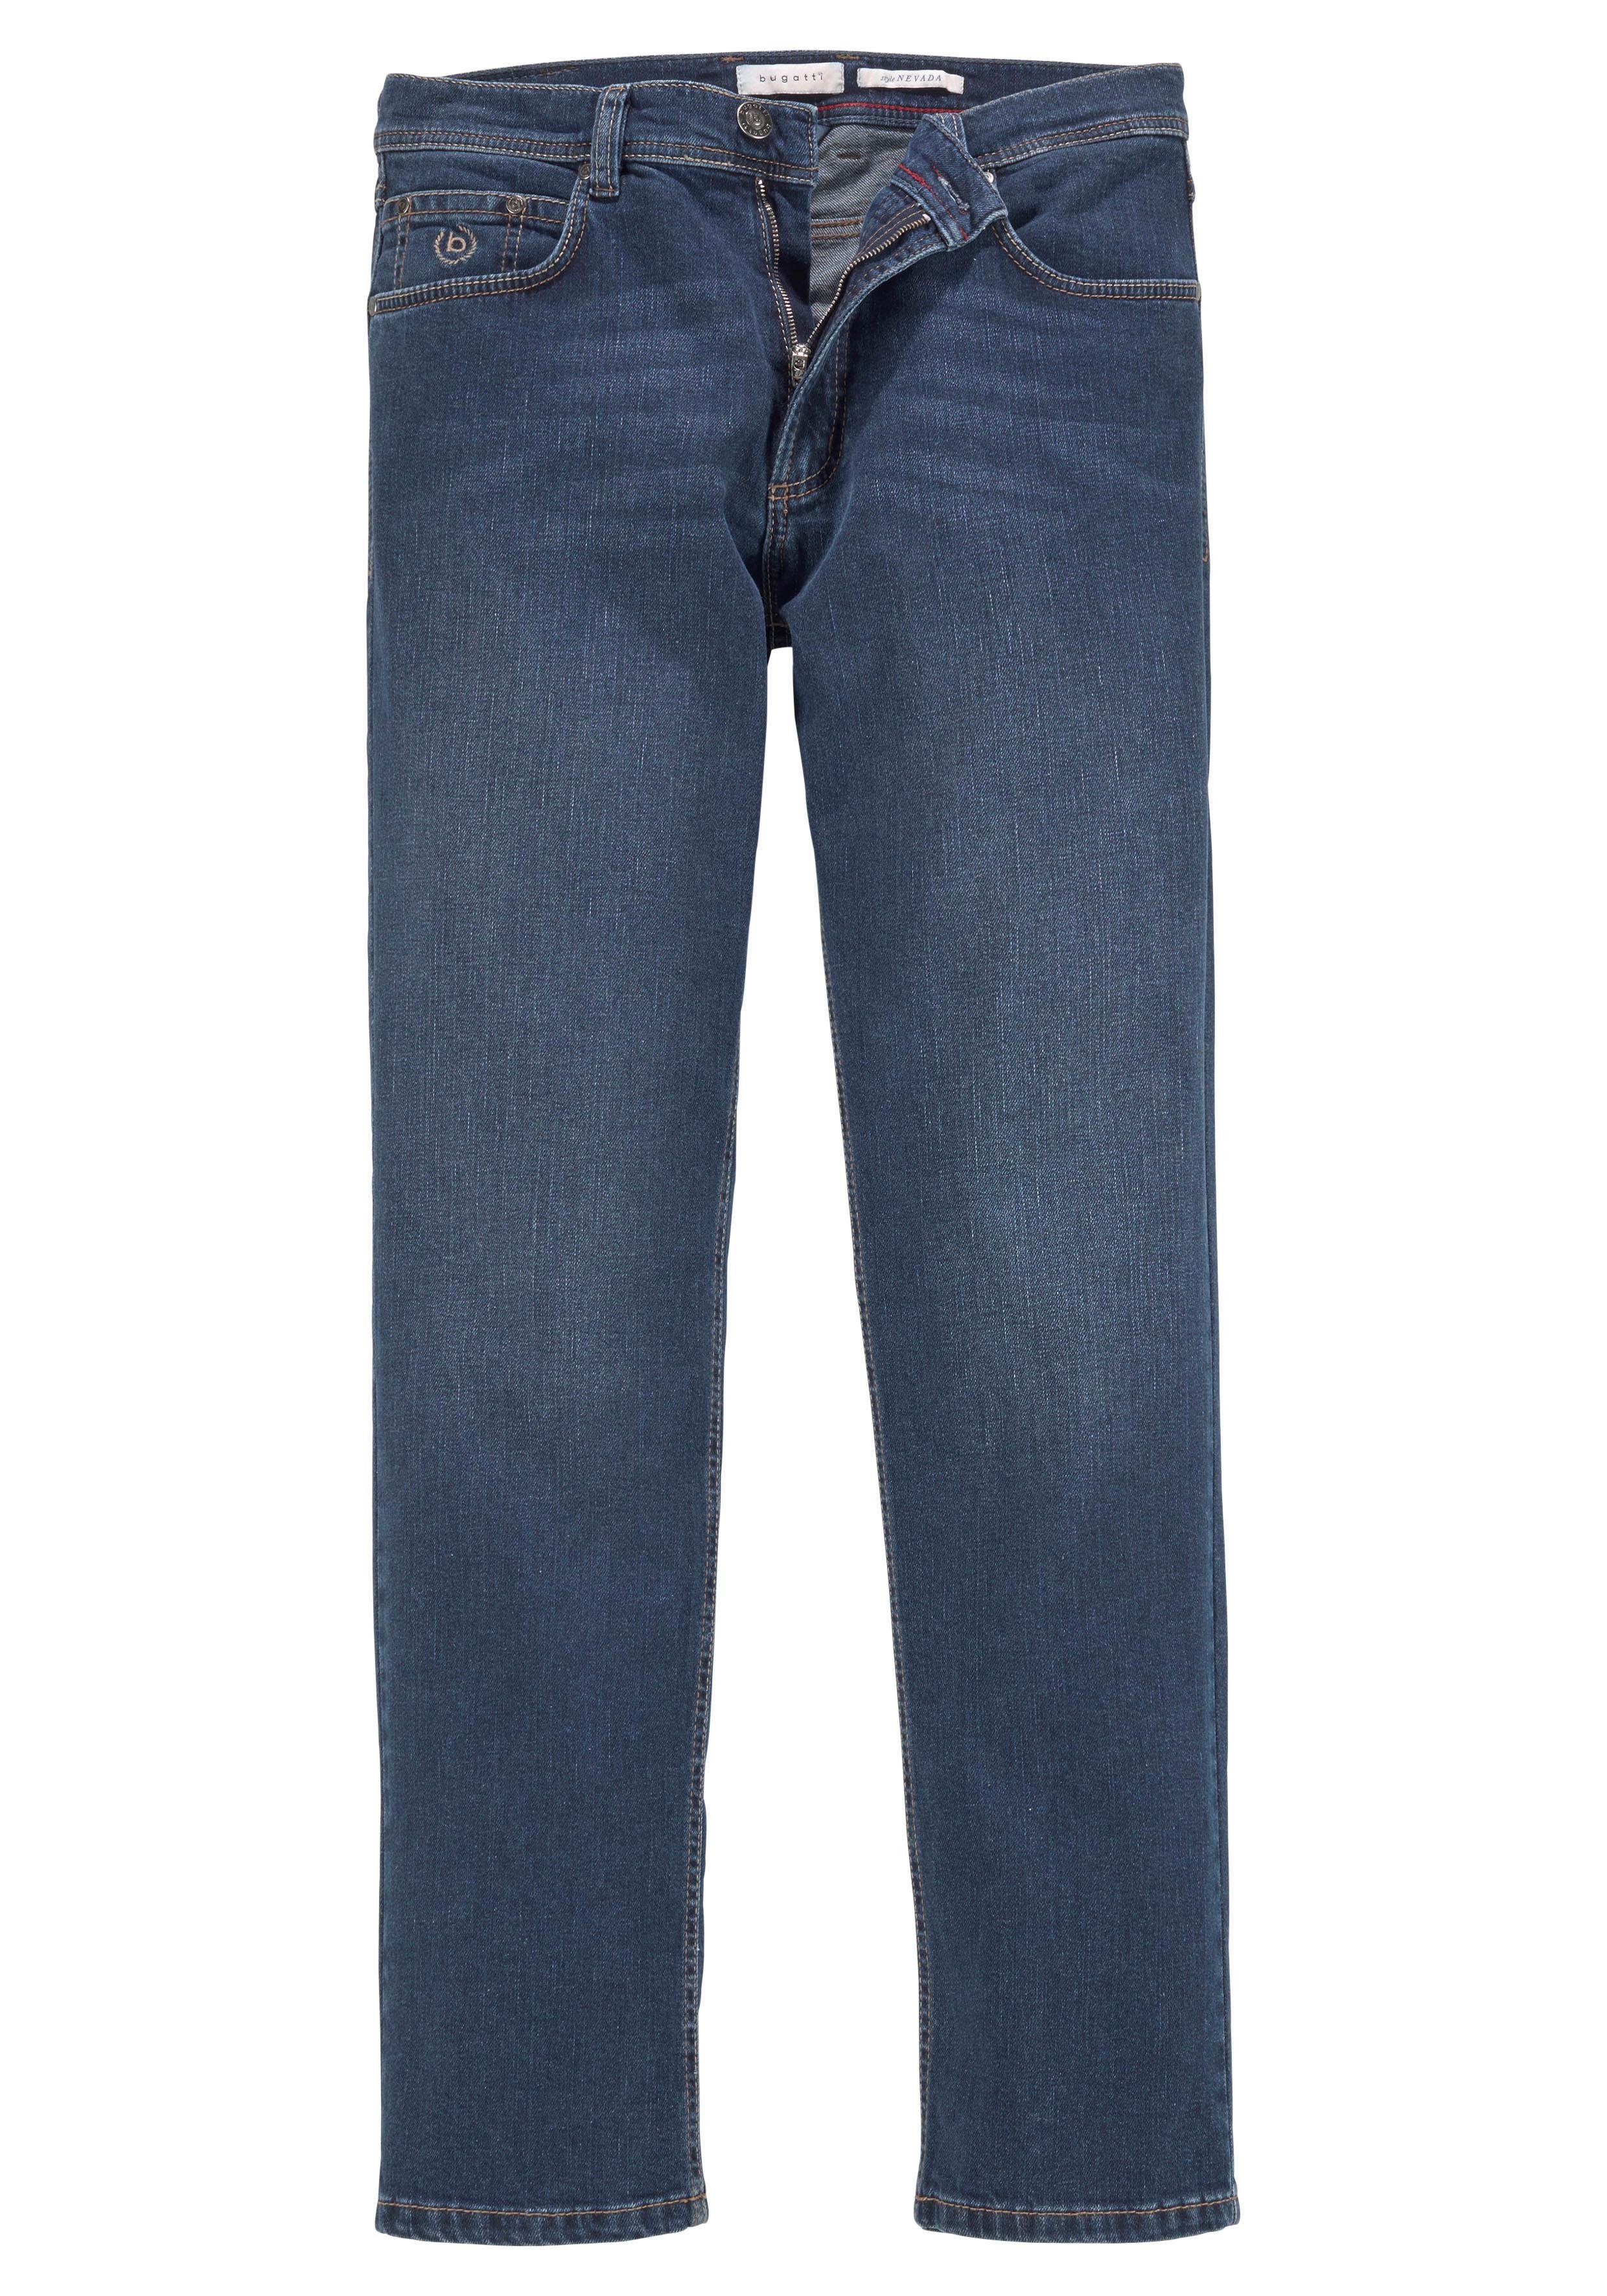 2farbige bugatti Regular-fit-Jeans Kontrastnähte denim Regular-fit,